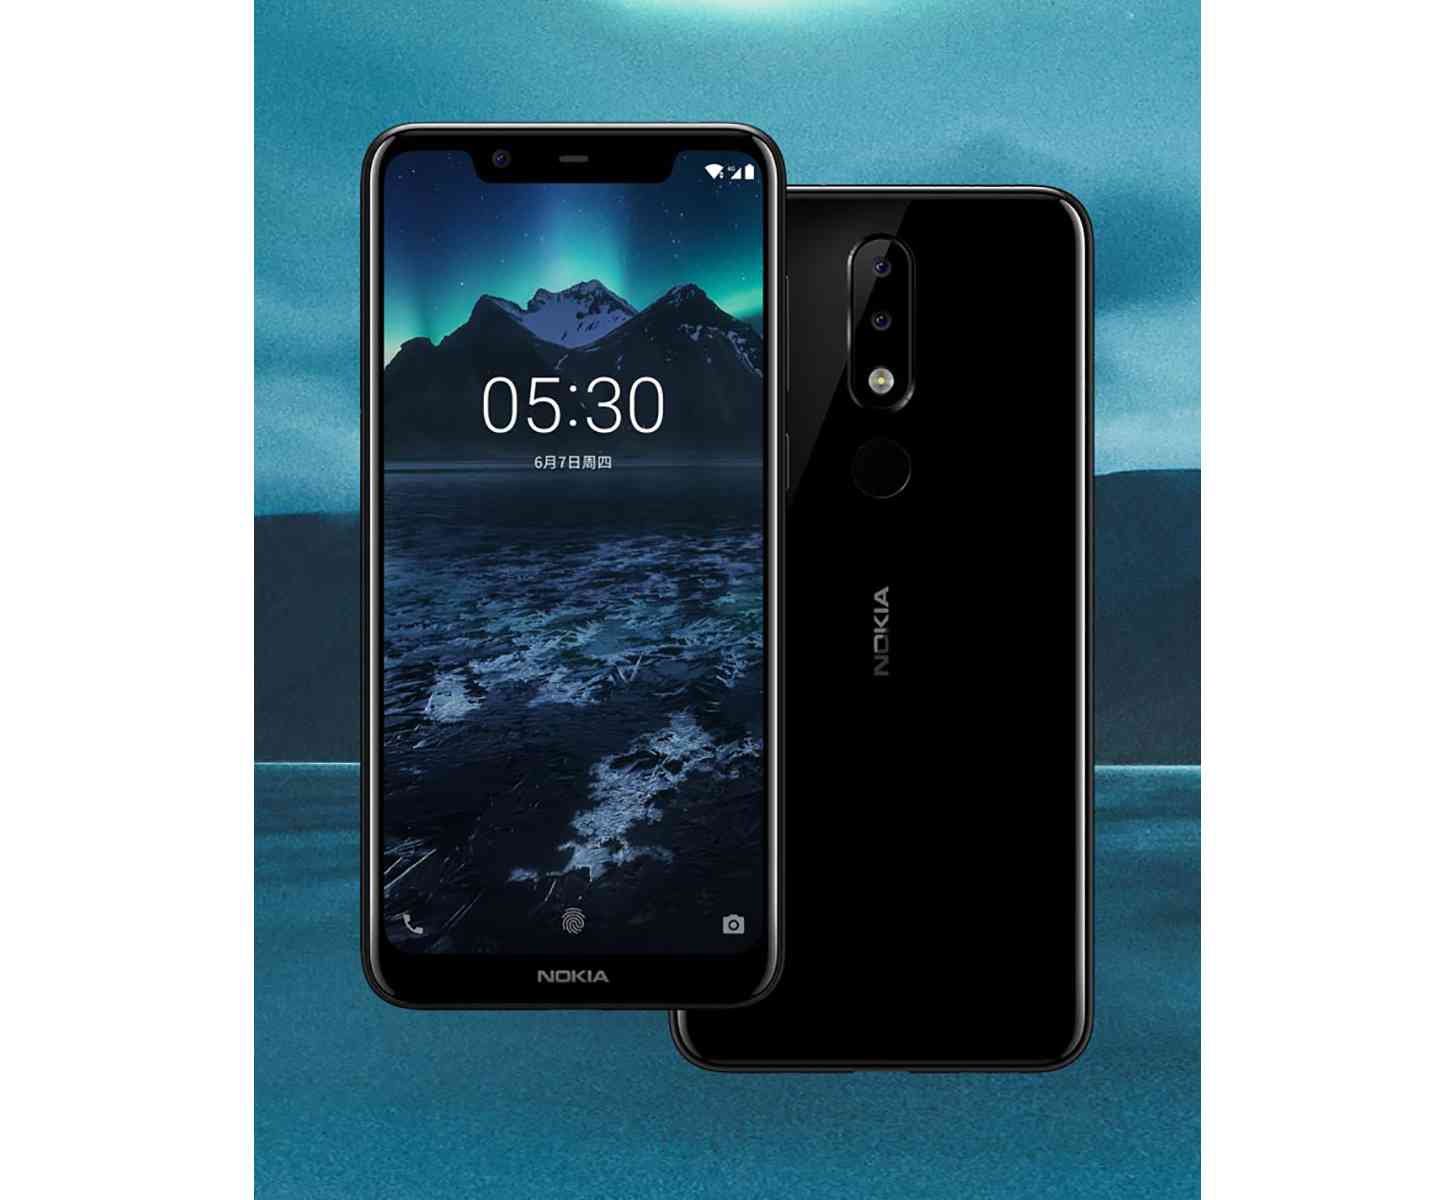 Nokia X5 official image